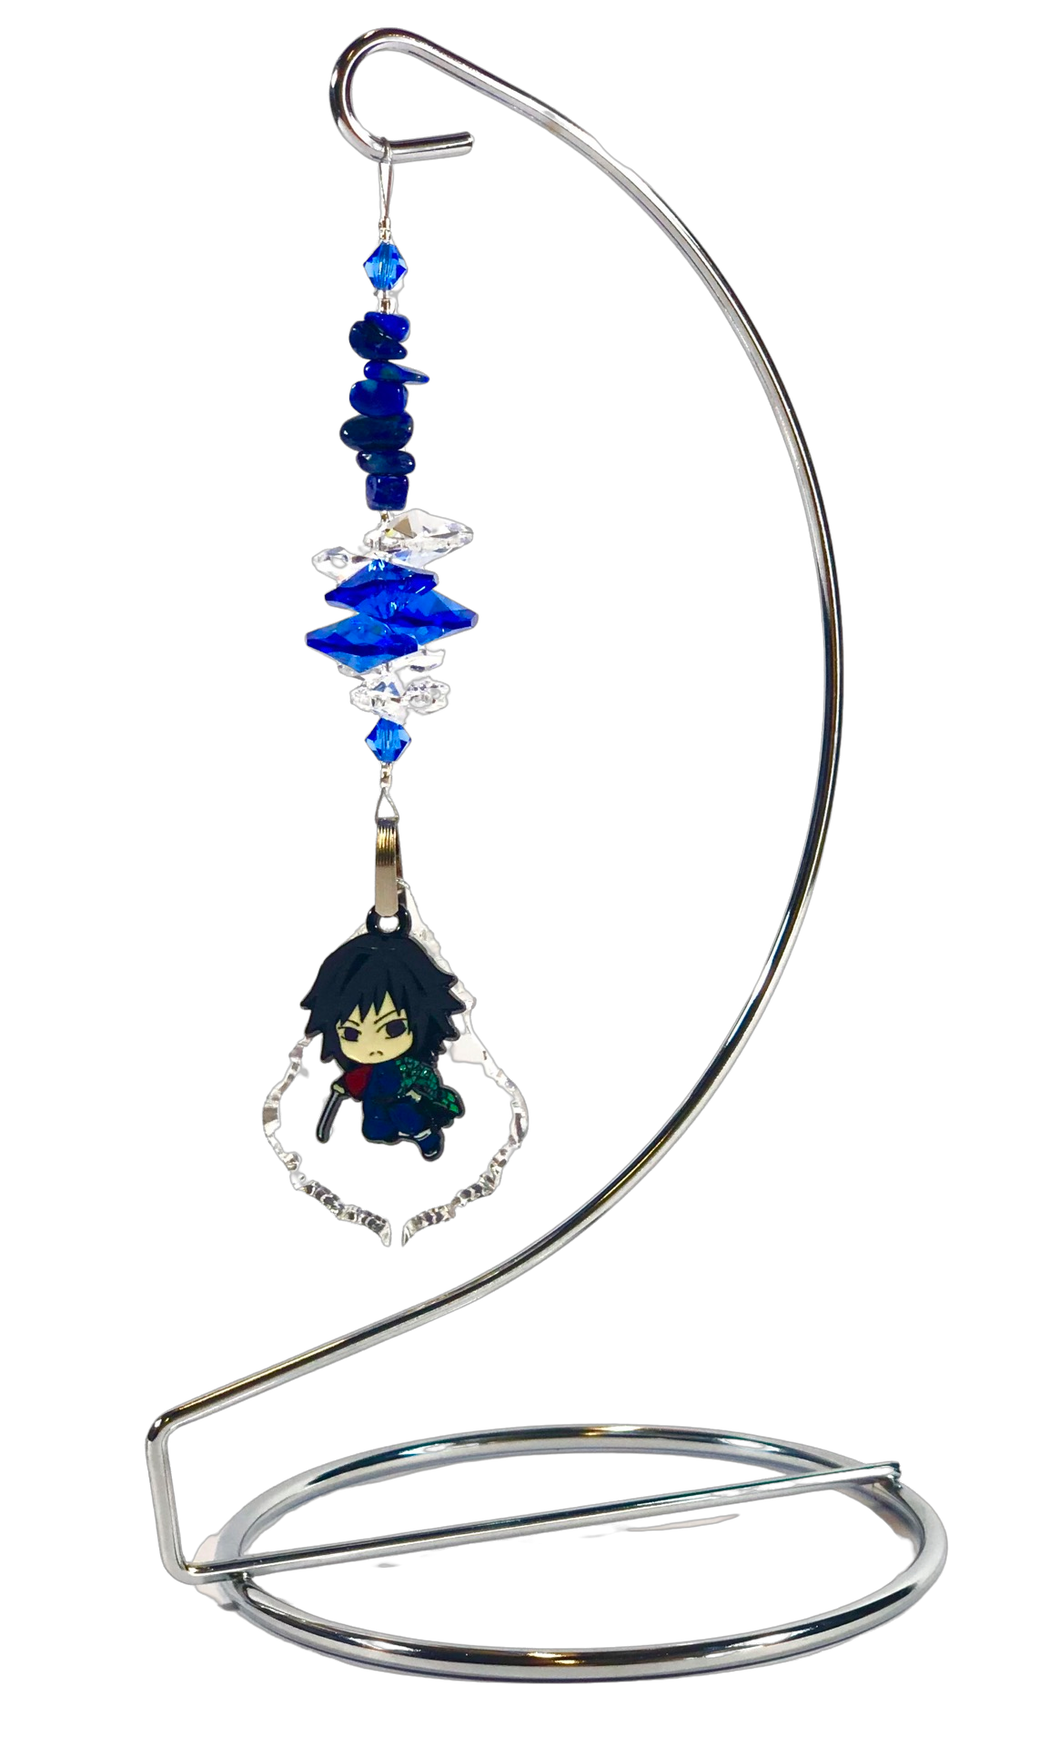 Demon Slayer - Giyu Tomioka crystal suncatcher is decorated with lapis lazuli gemstones and come on this amazing stand.